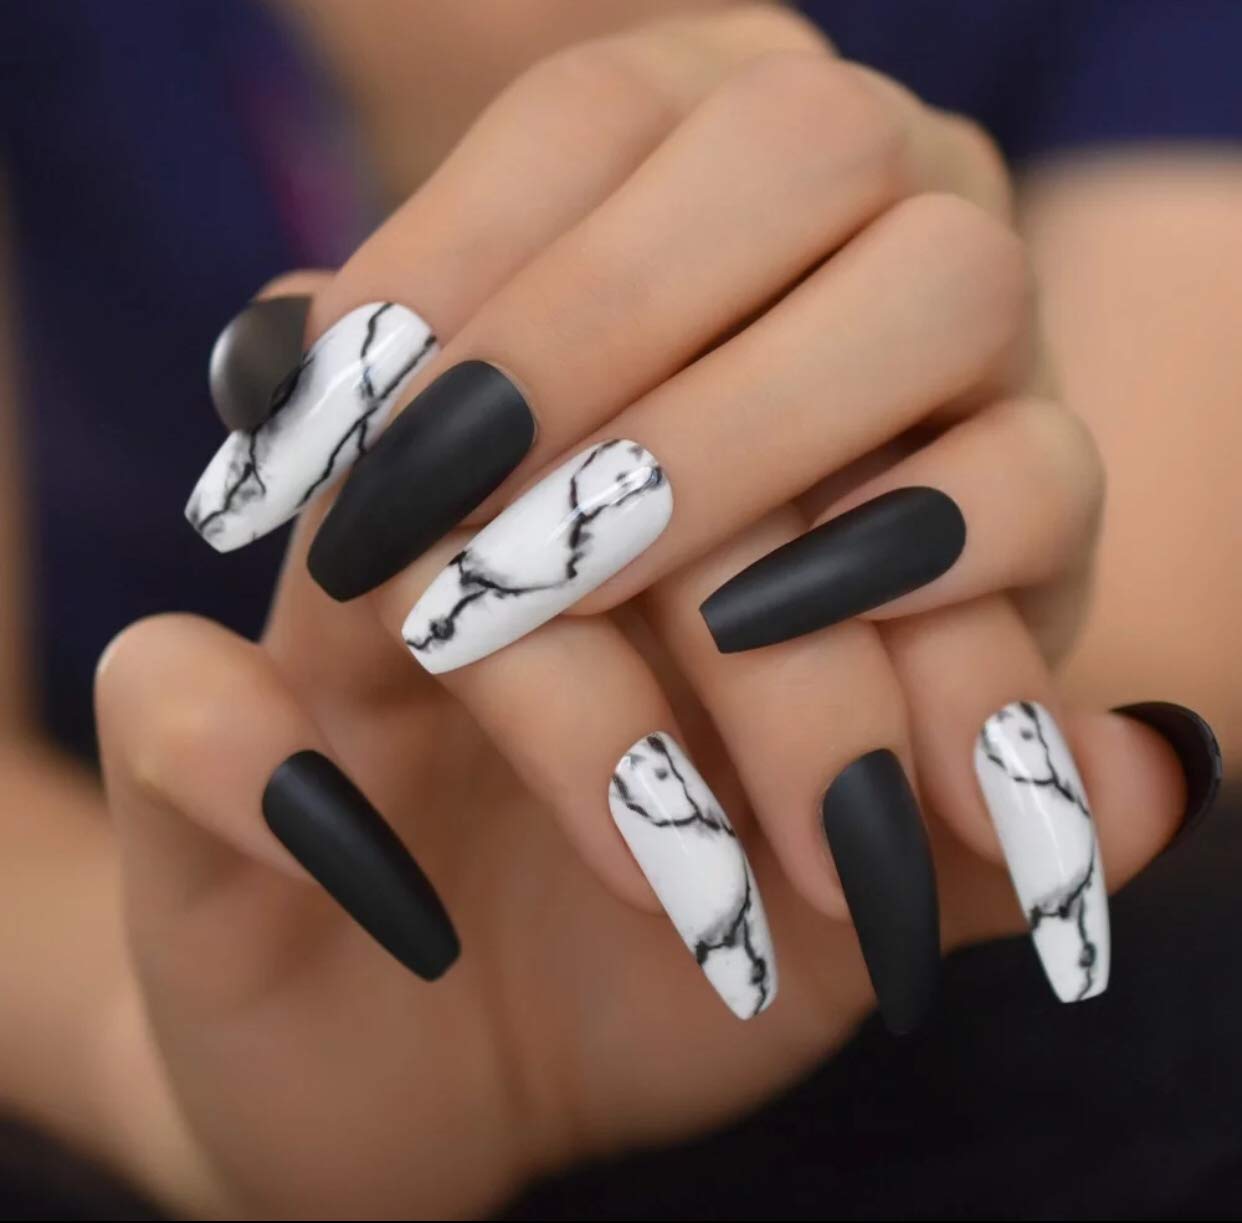 Black and White Nail Design